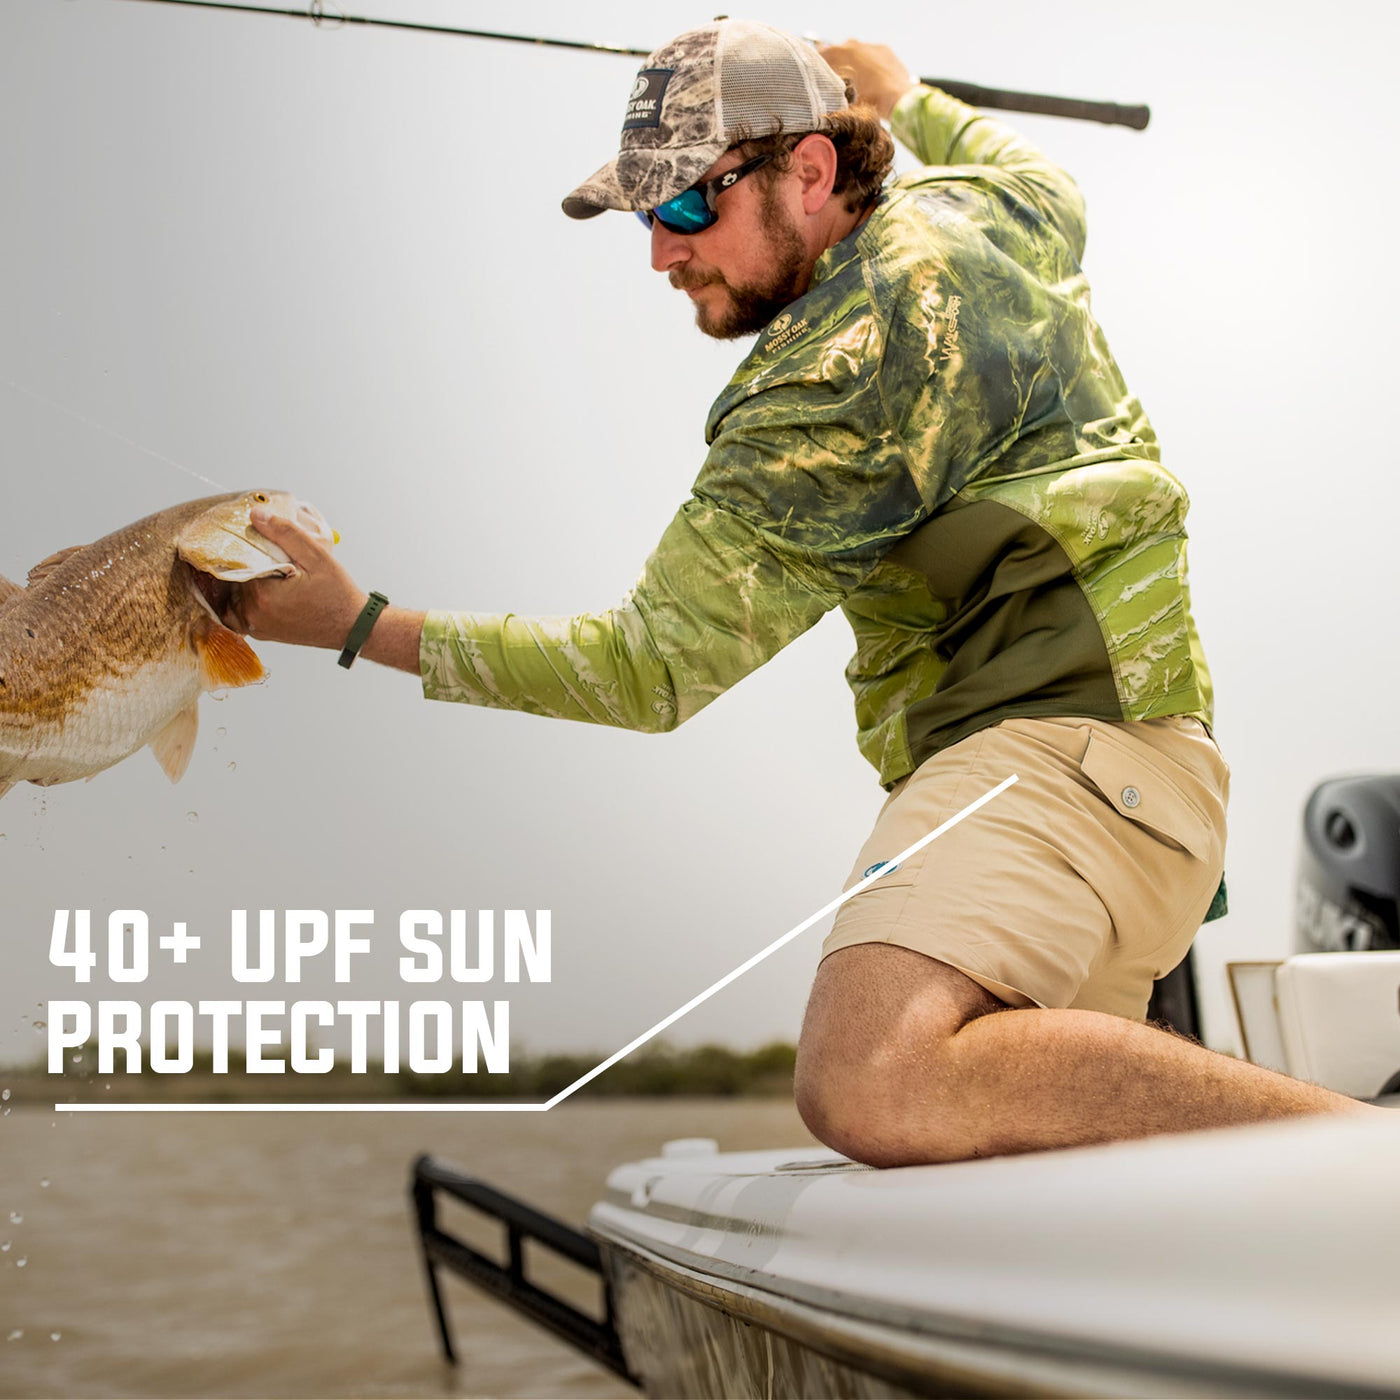 Mossy Oak Men's Flex Fishing Shorts 40+ UPF Sun Protection